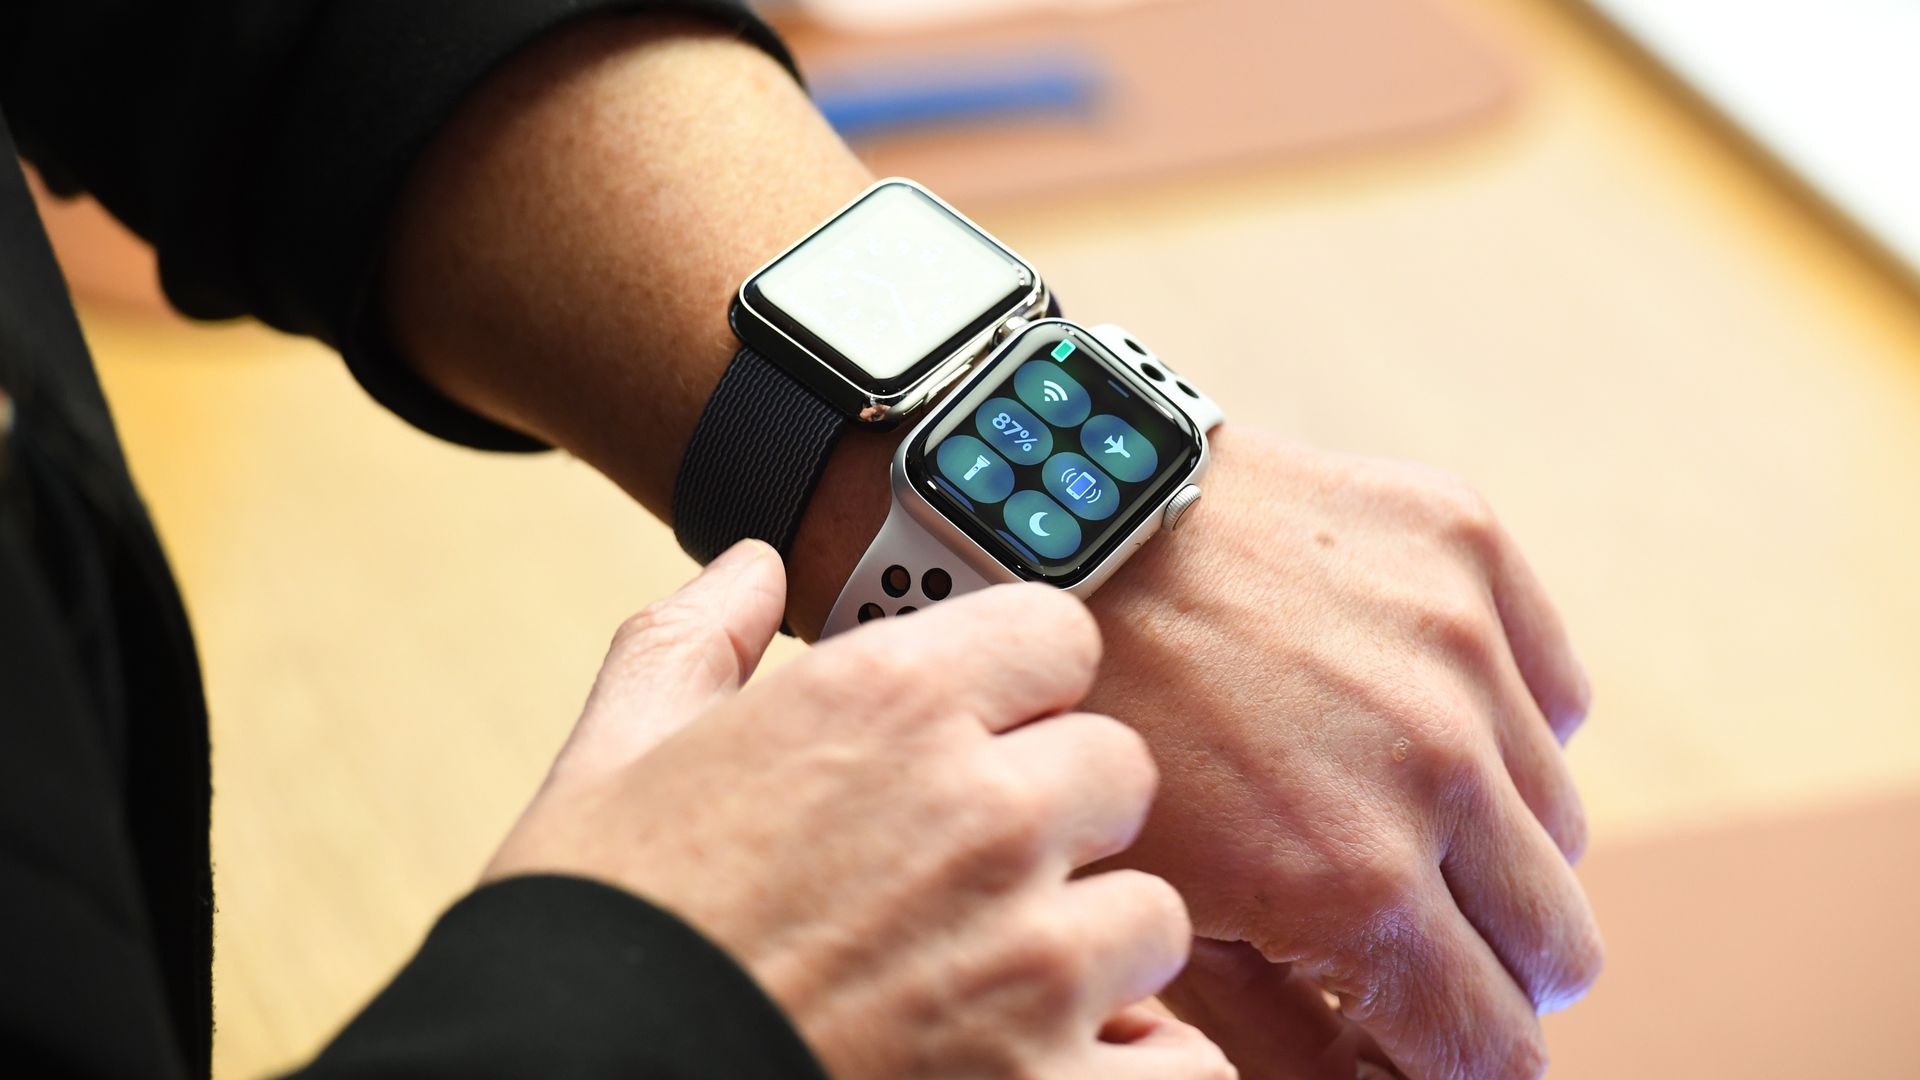 Apple watch on someone's wrist